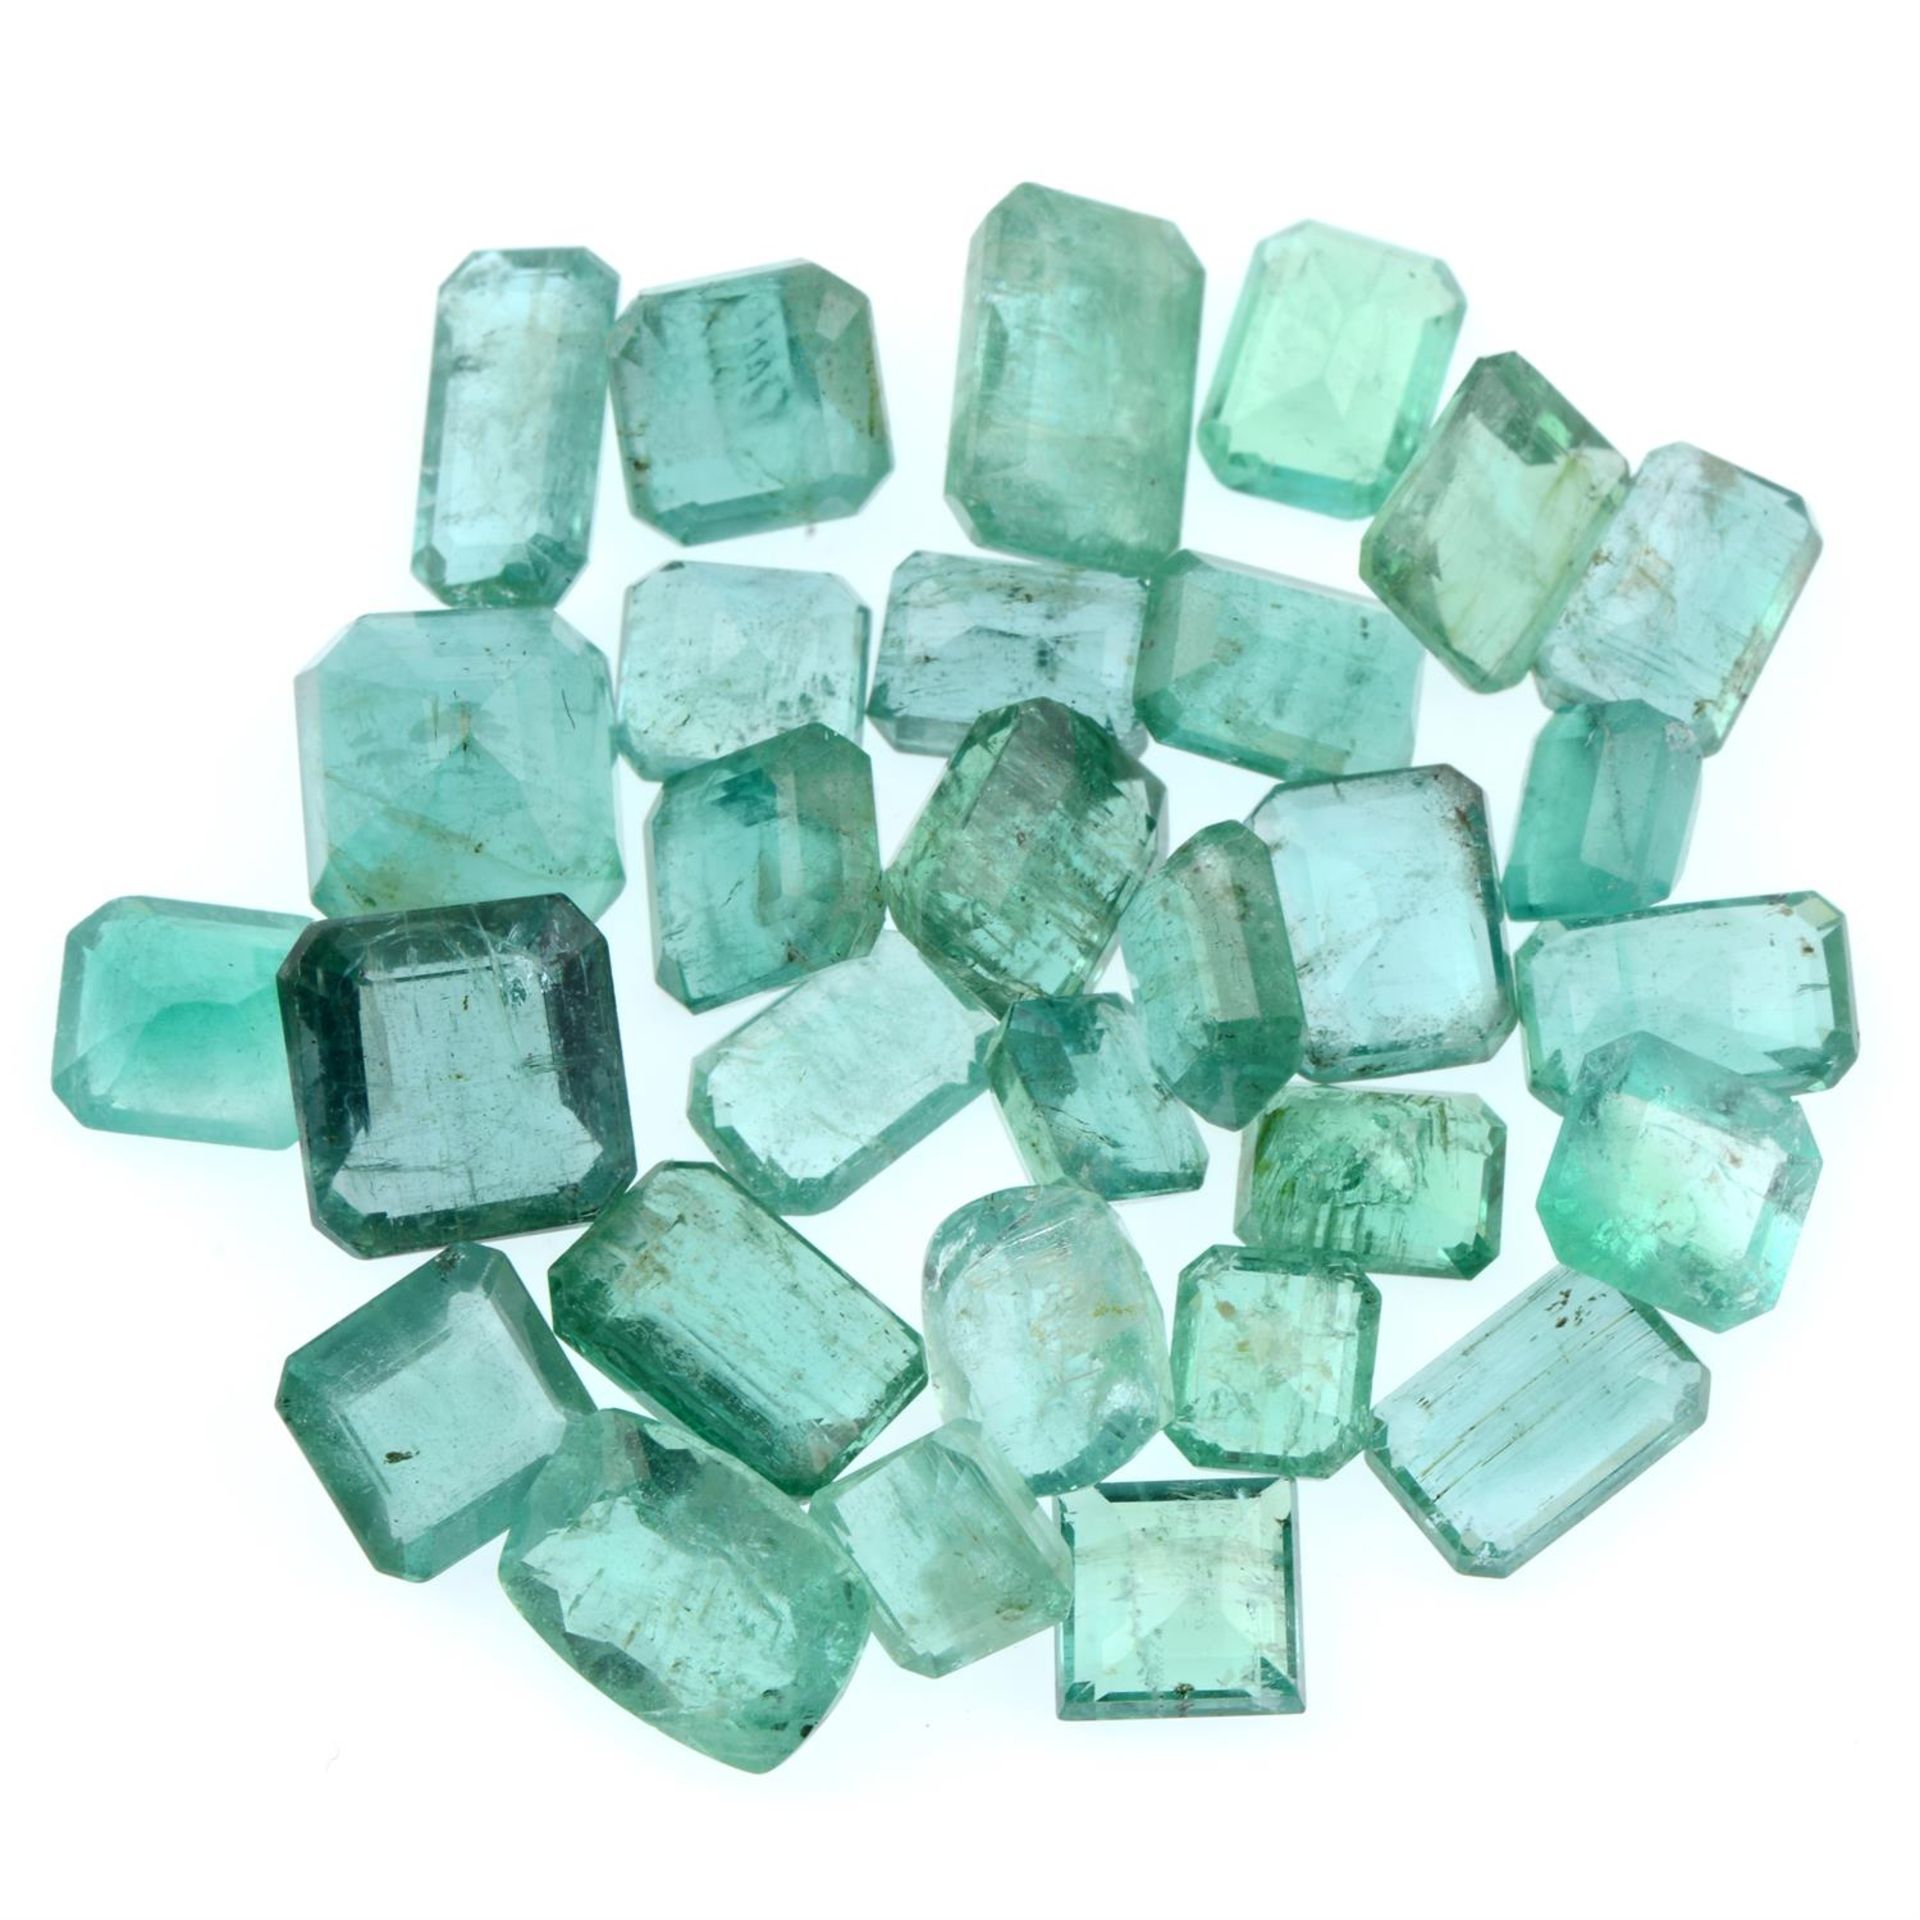 Rectangular-shape emeralds, 21.16ct